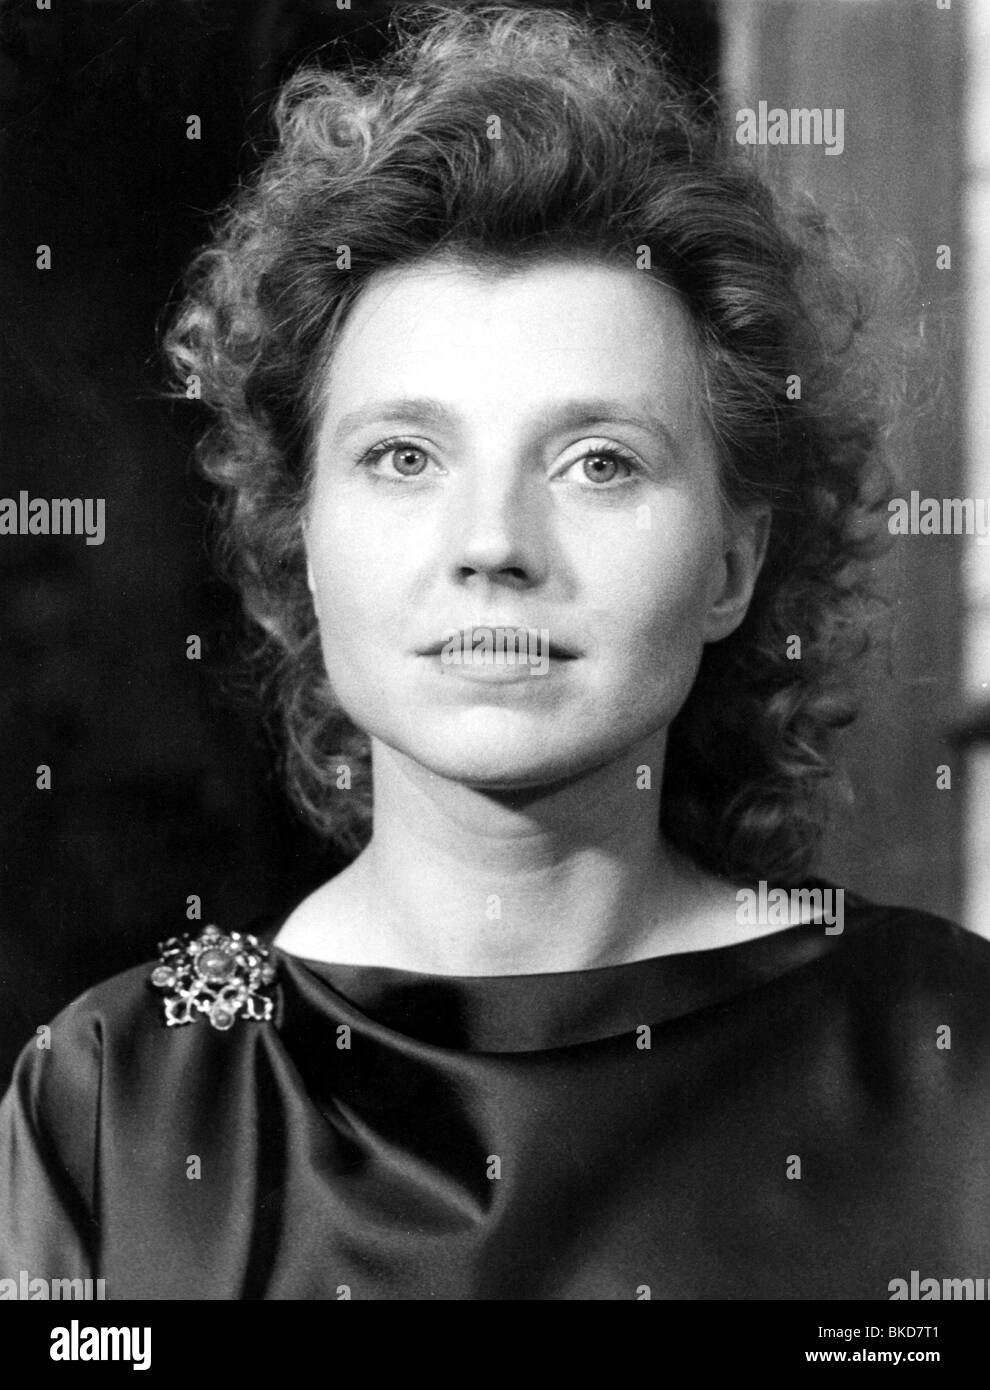 Schygulla, Hanna, * 25.12.1943, actrice allemande, portrait, vers 1978, Banque D'Images